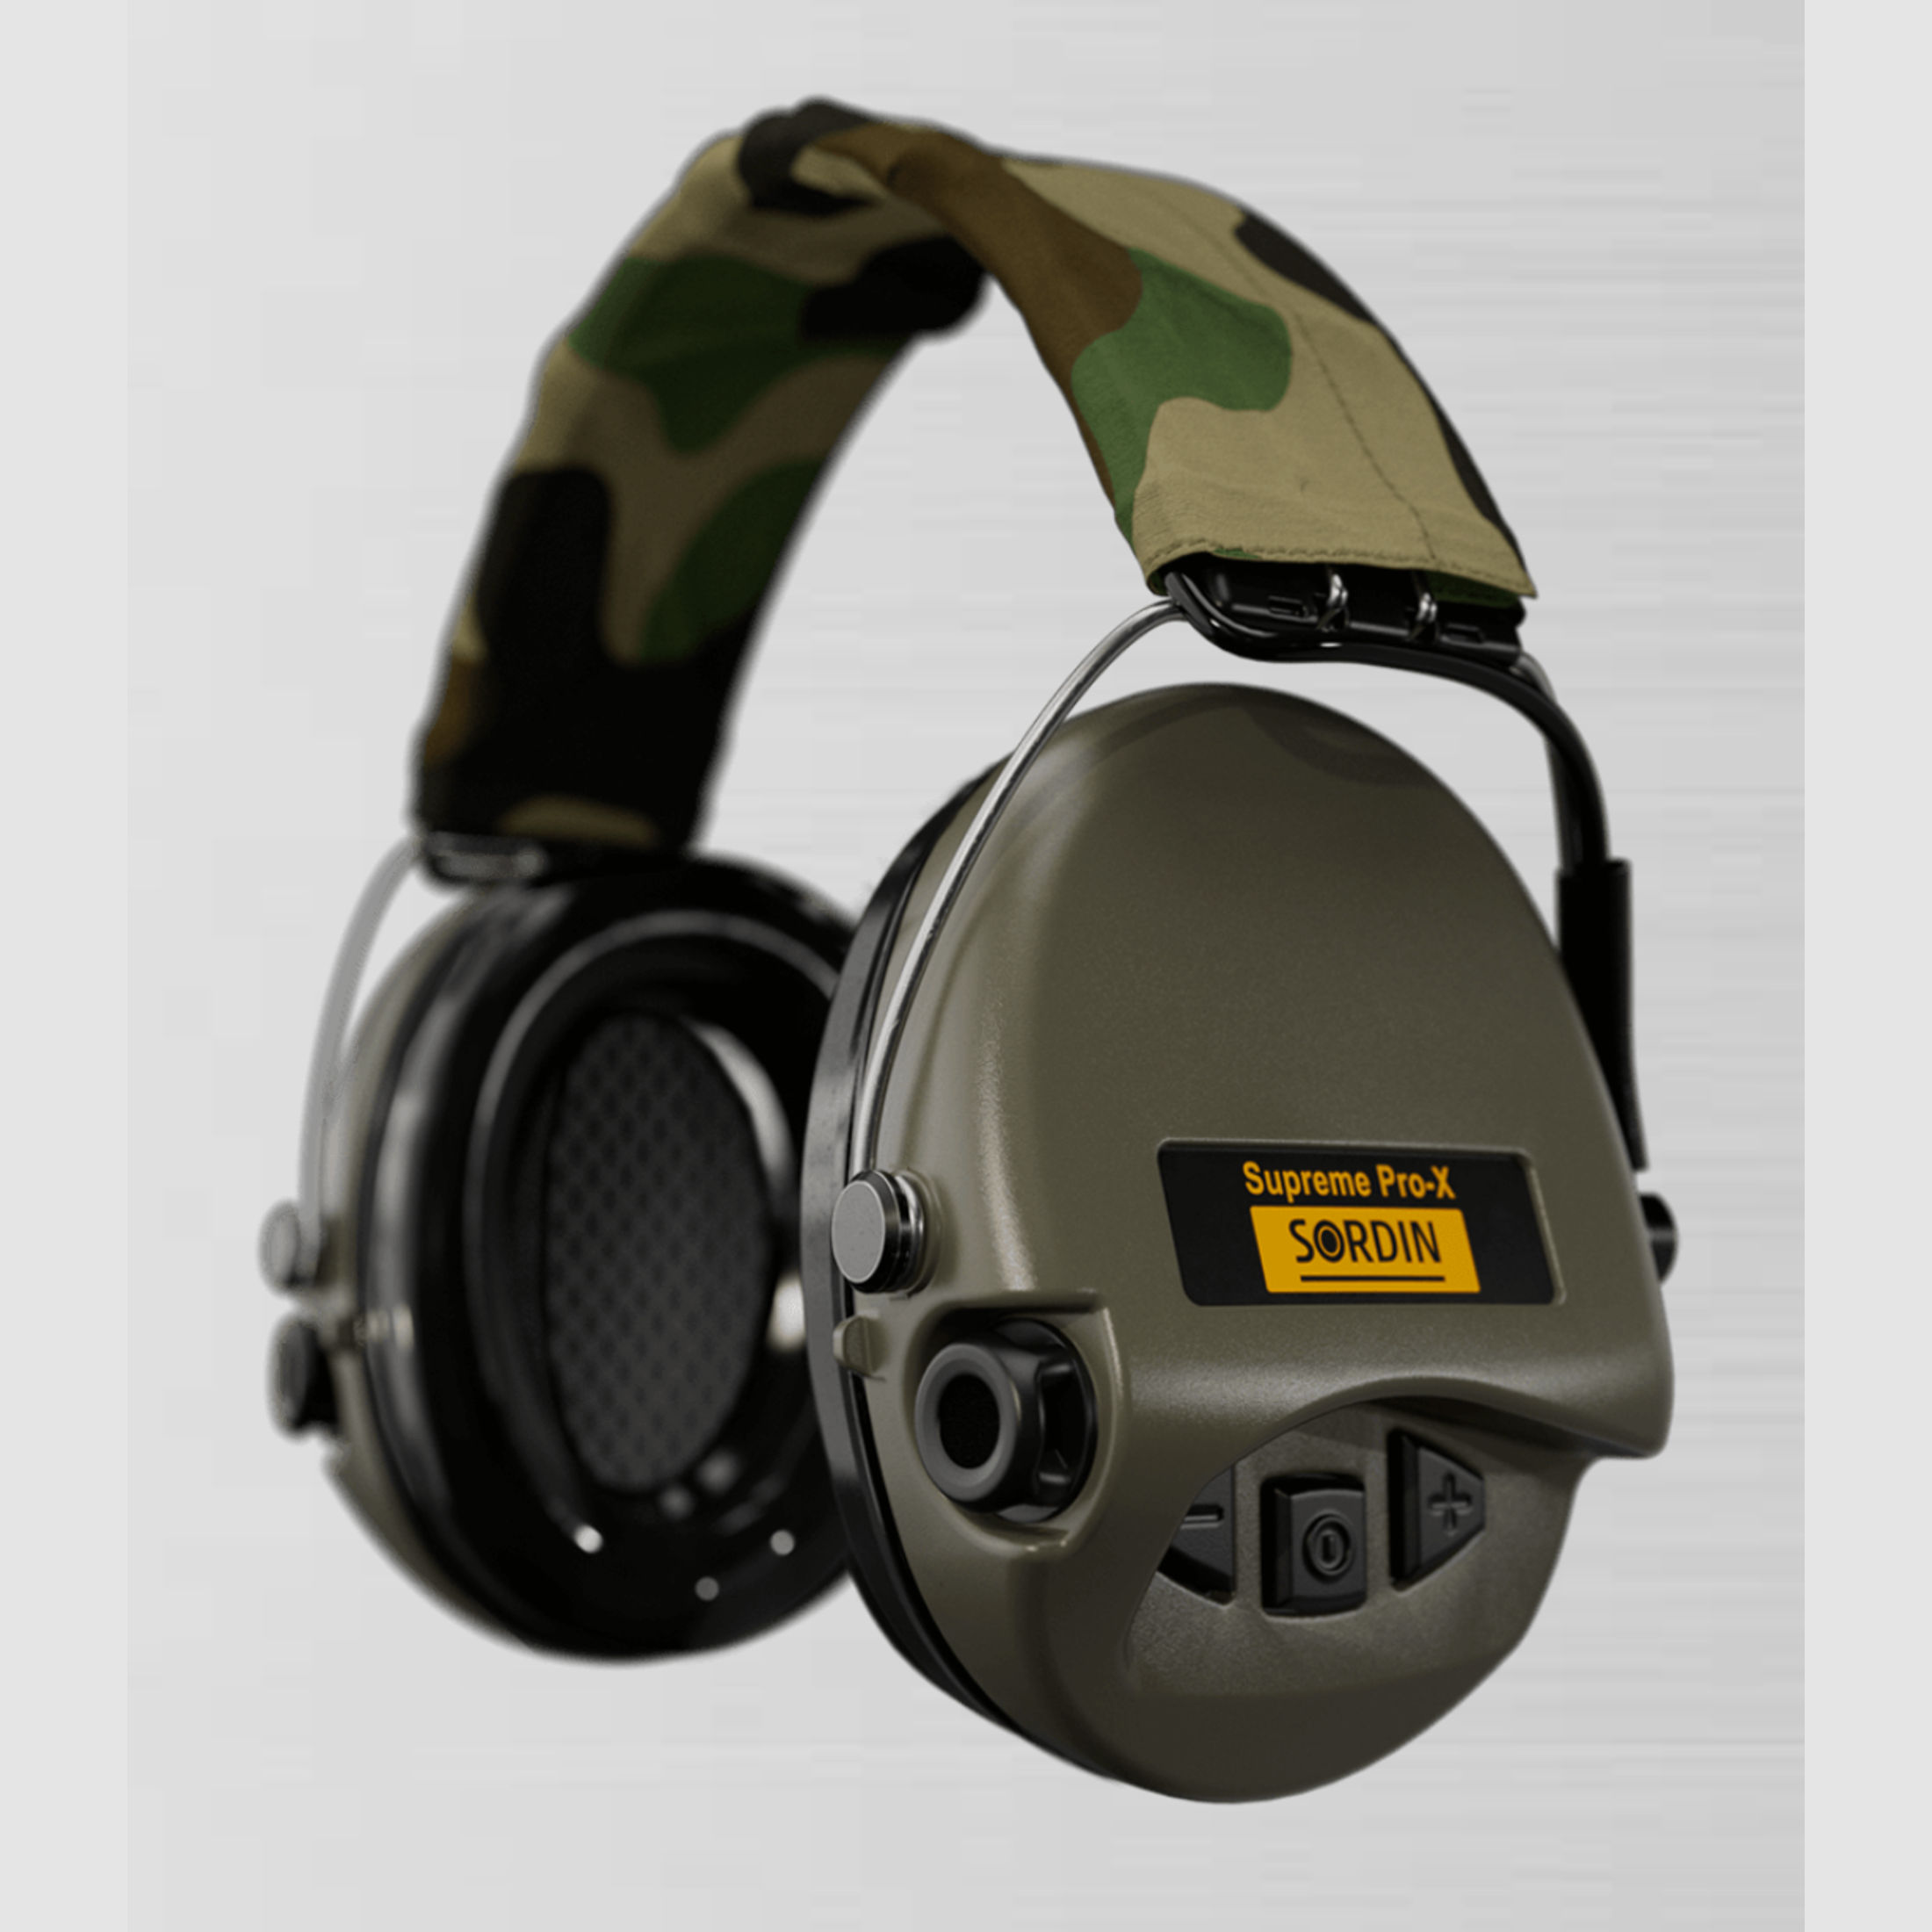 Sordin 75302-X-S Elektronischer Gehörschutz Supreme Pro X Headband Grün Camo